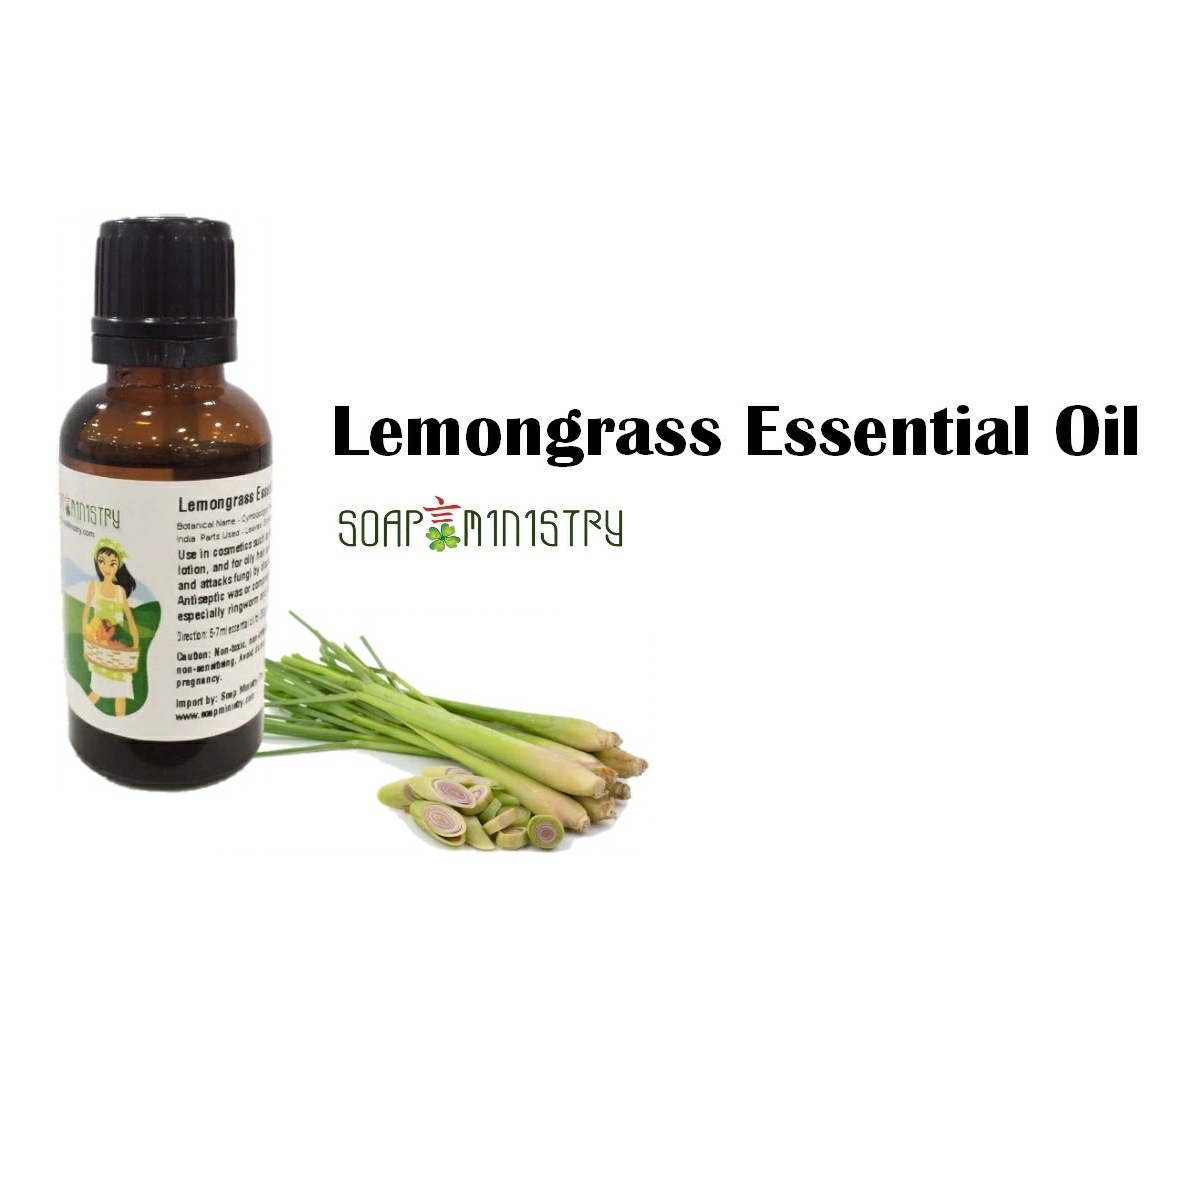 Lemongrass Essential Oil 100ml